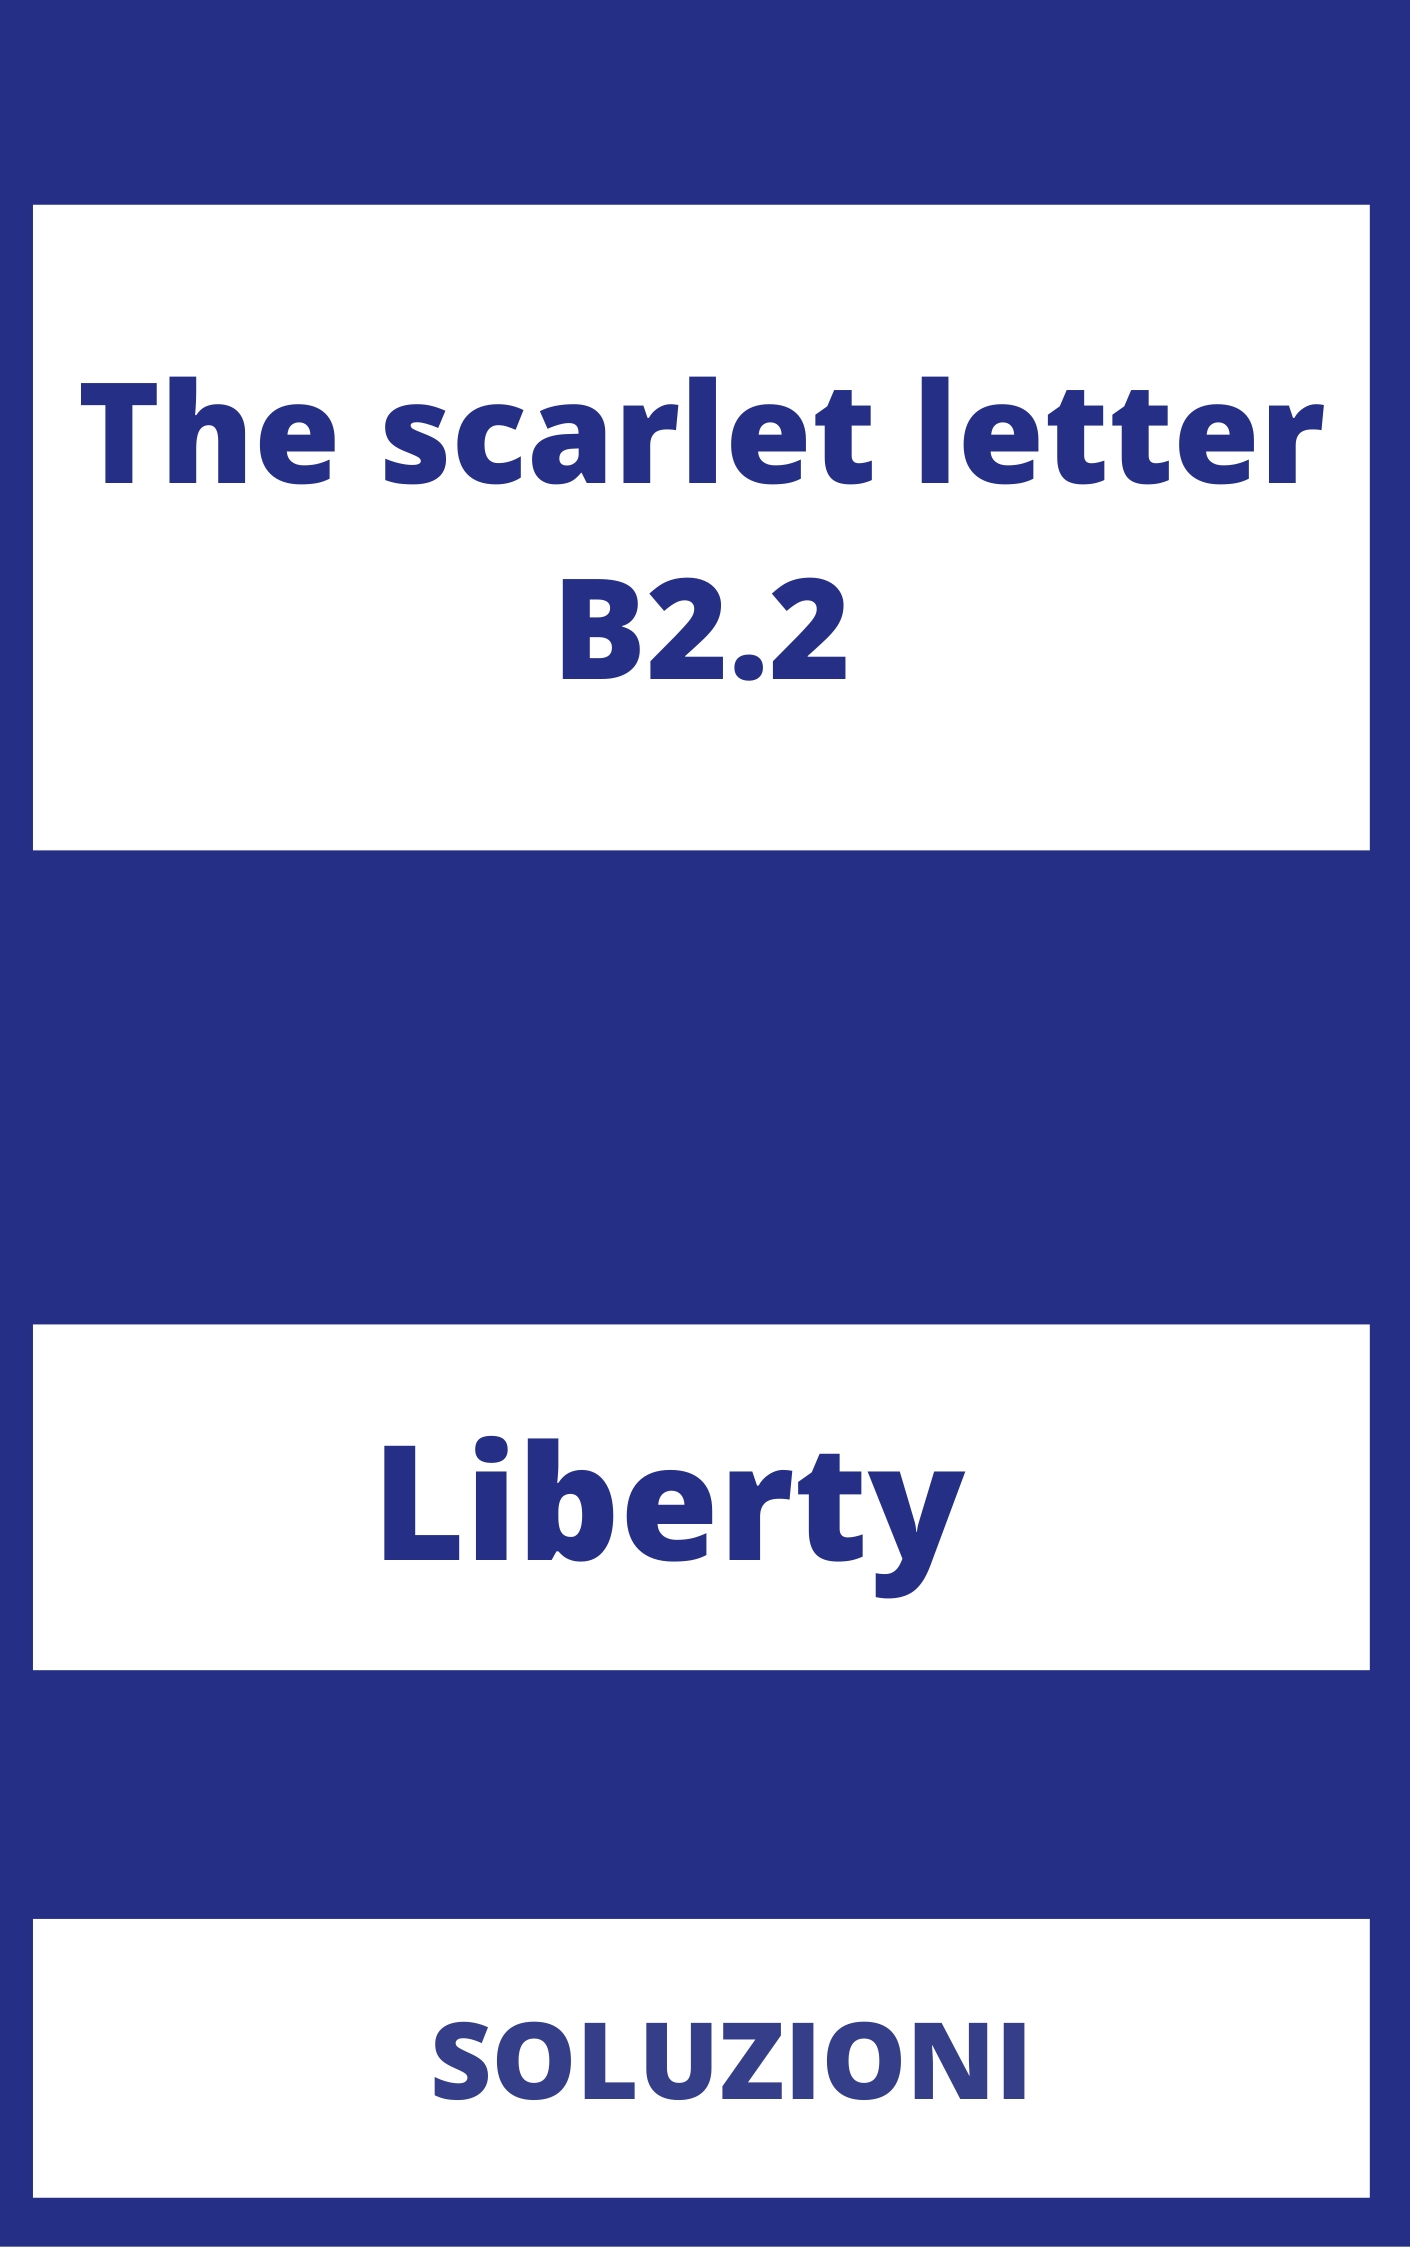 The scarlet letter B2.2